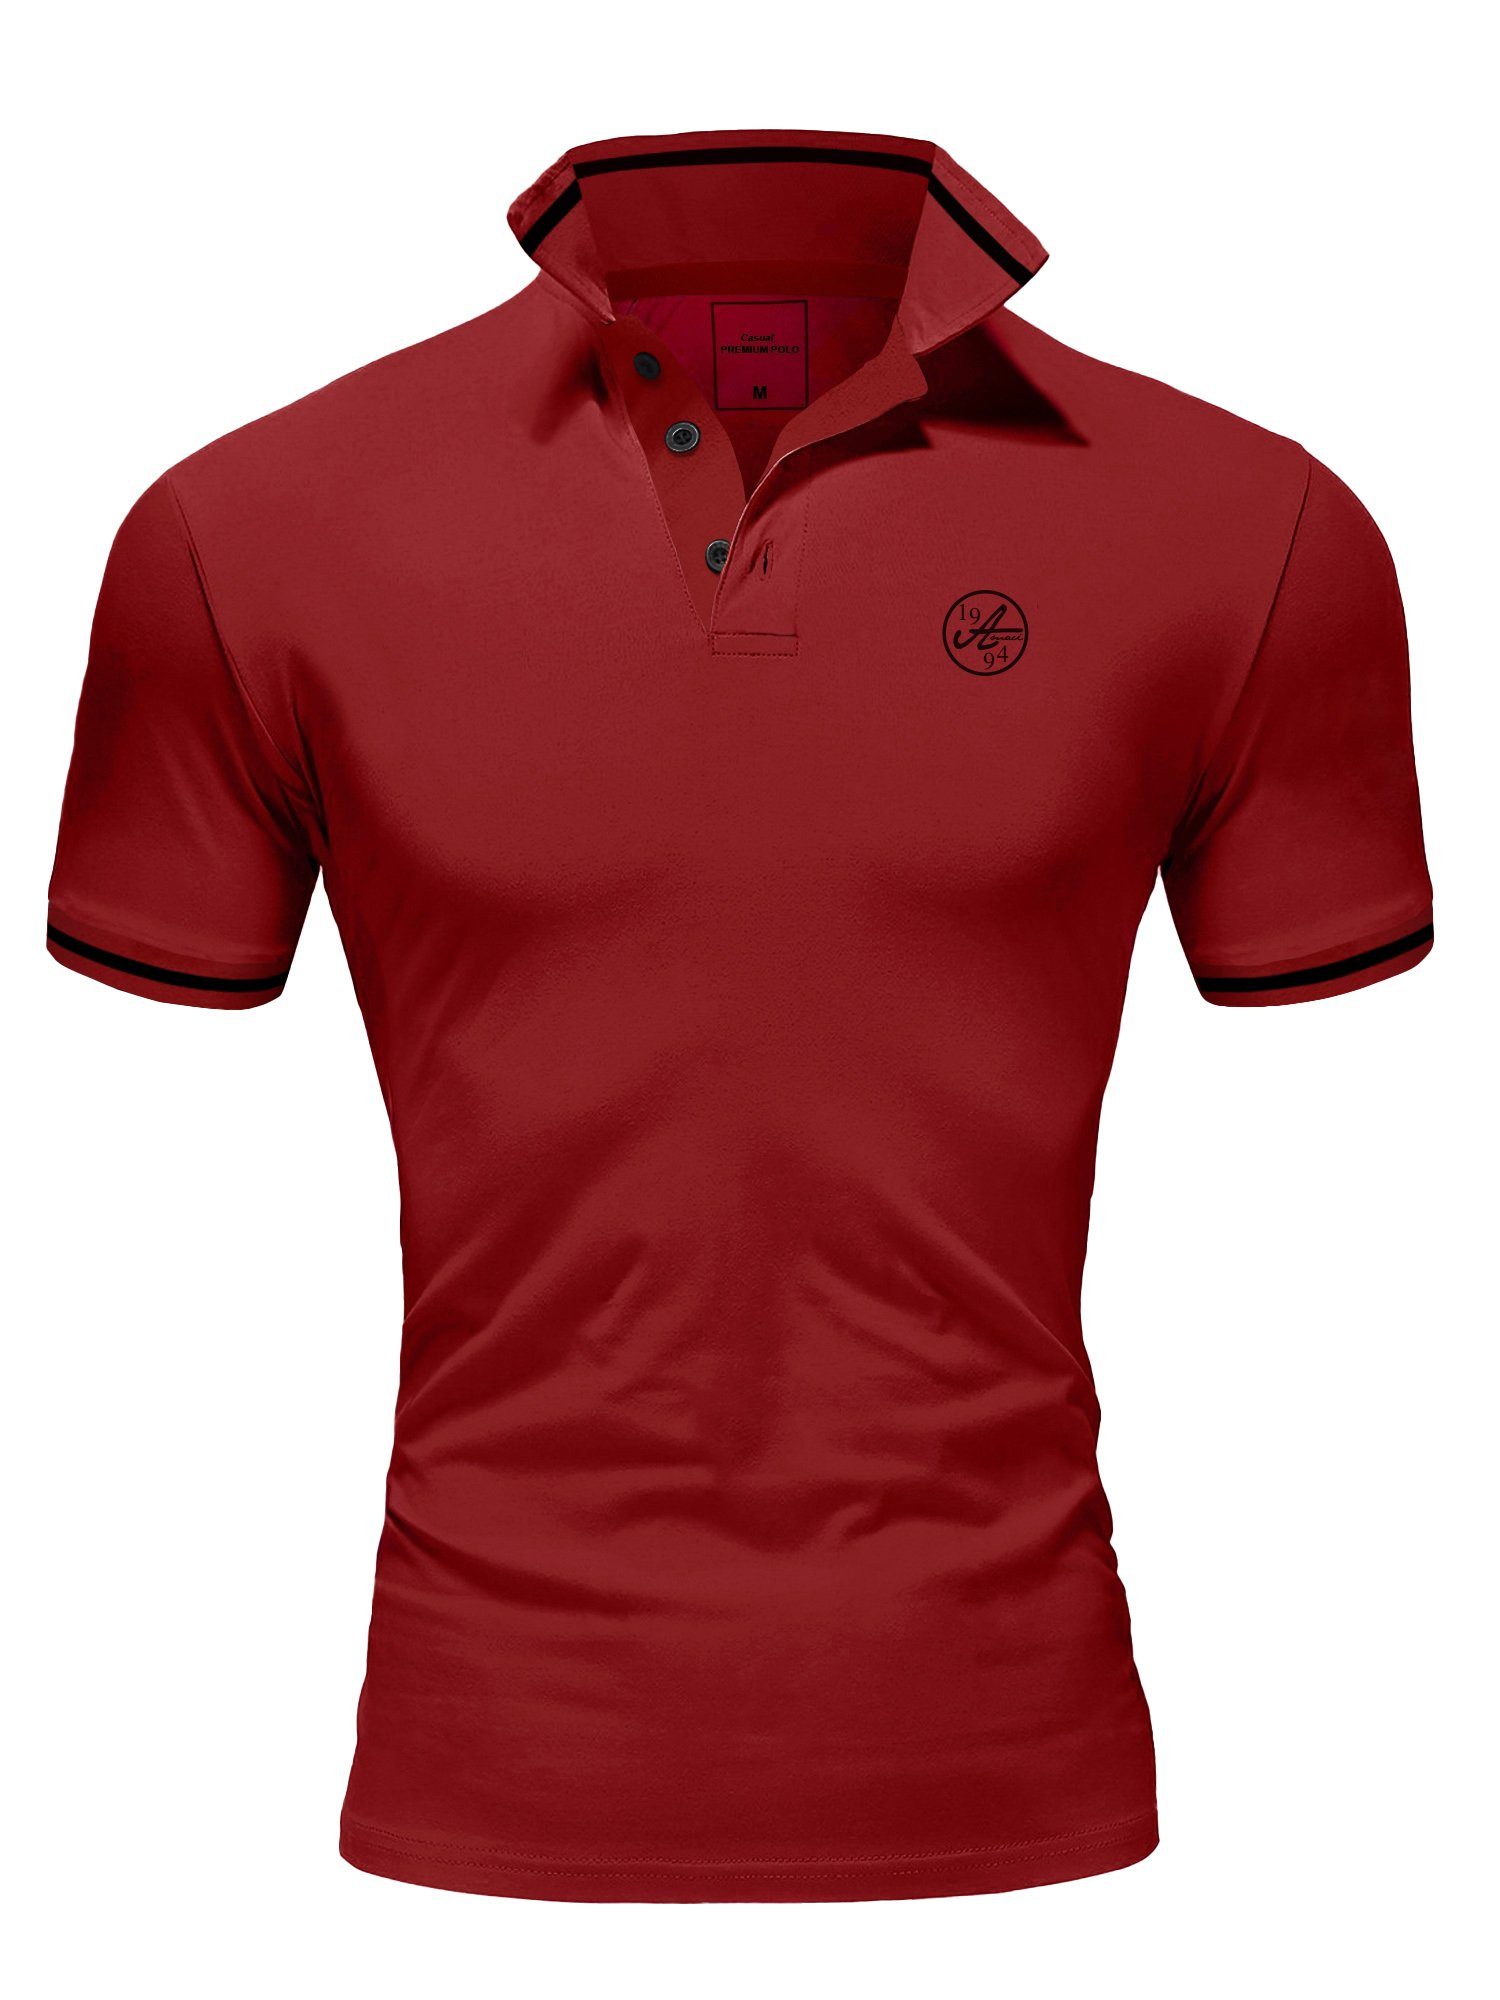 Polohemd Bordeaux/Schwarz T-Shirt Stickerei Basic MACON Poloshirt Kontrast Amaci&Sons Herren Kurzarm